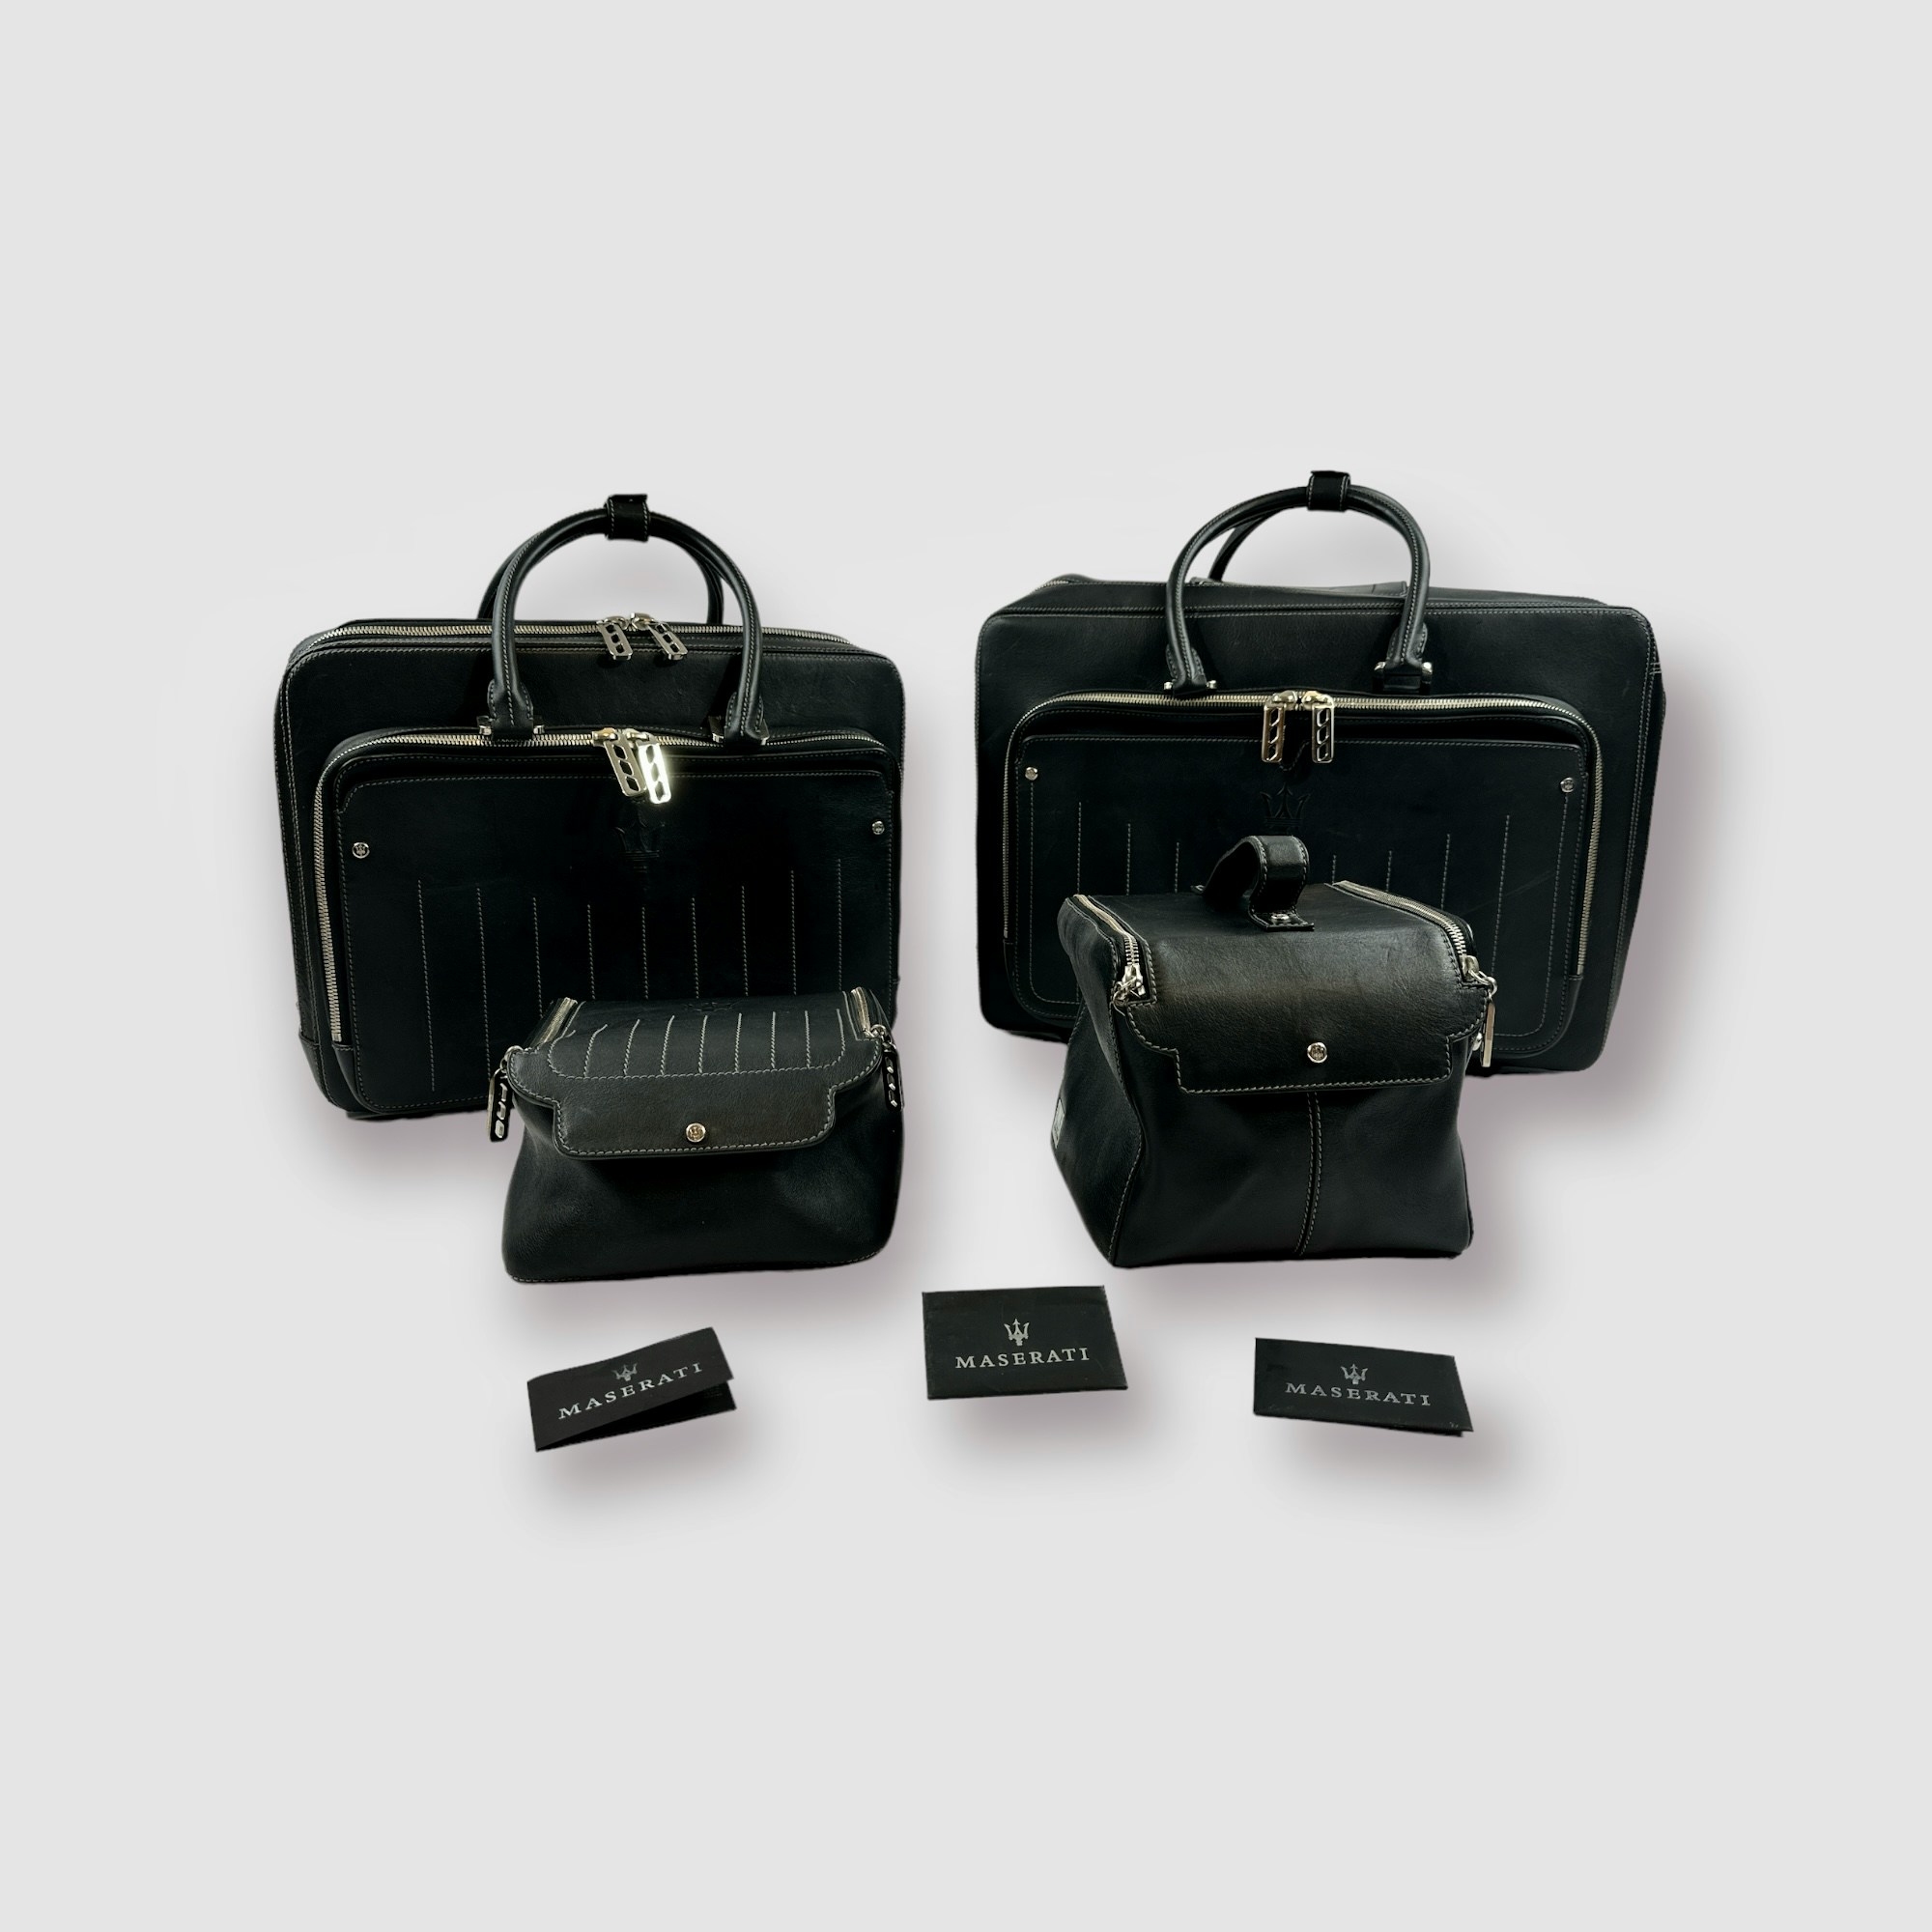 Sold at Auction: Maserati and Poltrona Frau, Quattroporte Luggage